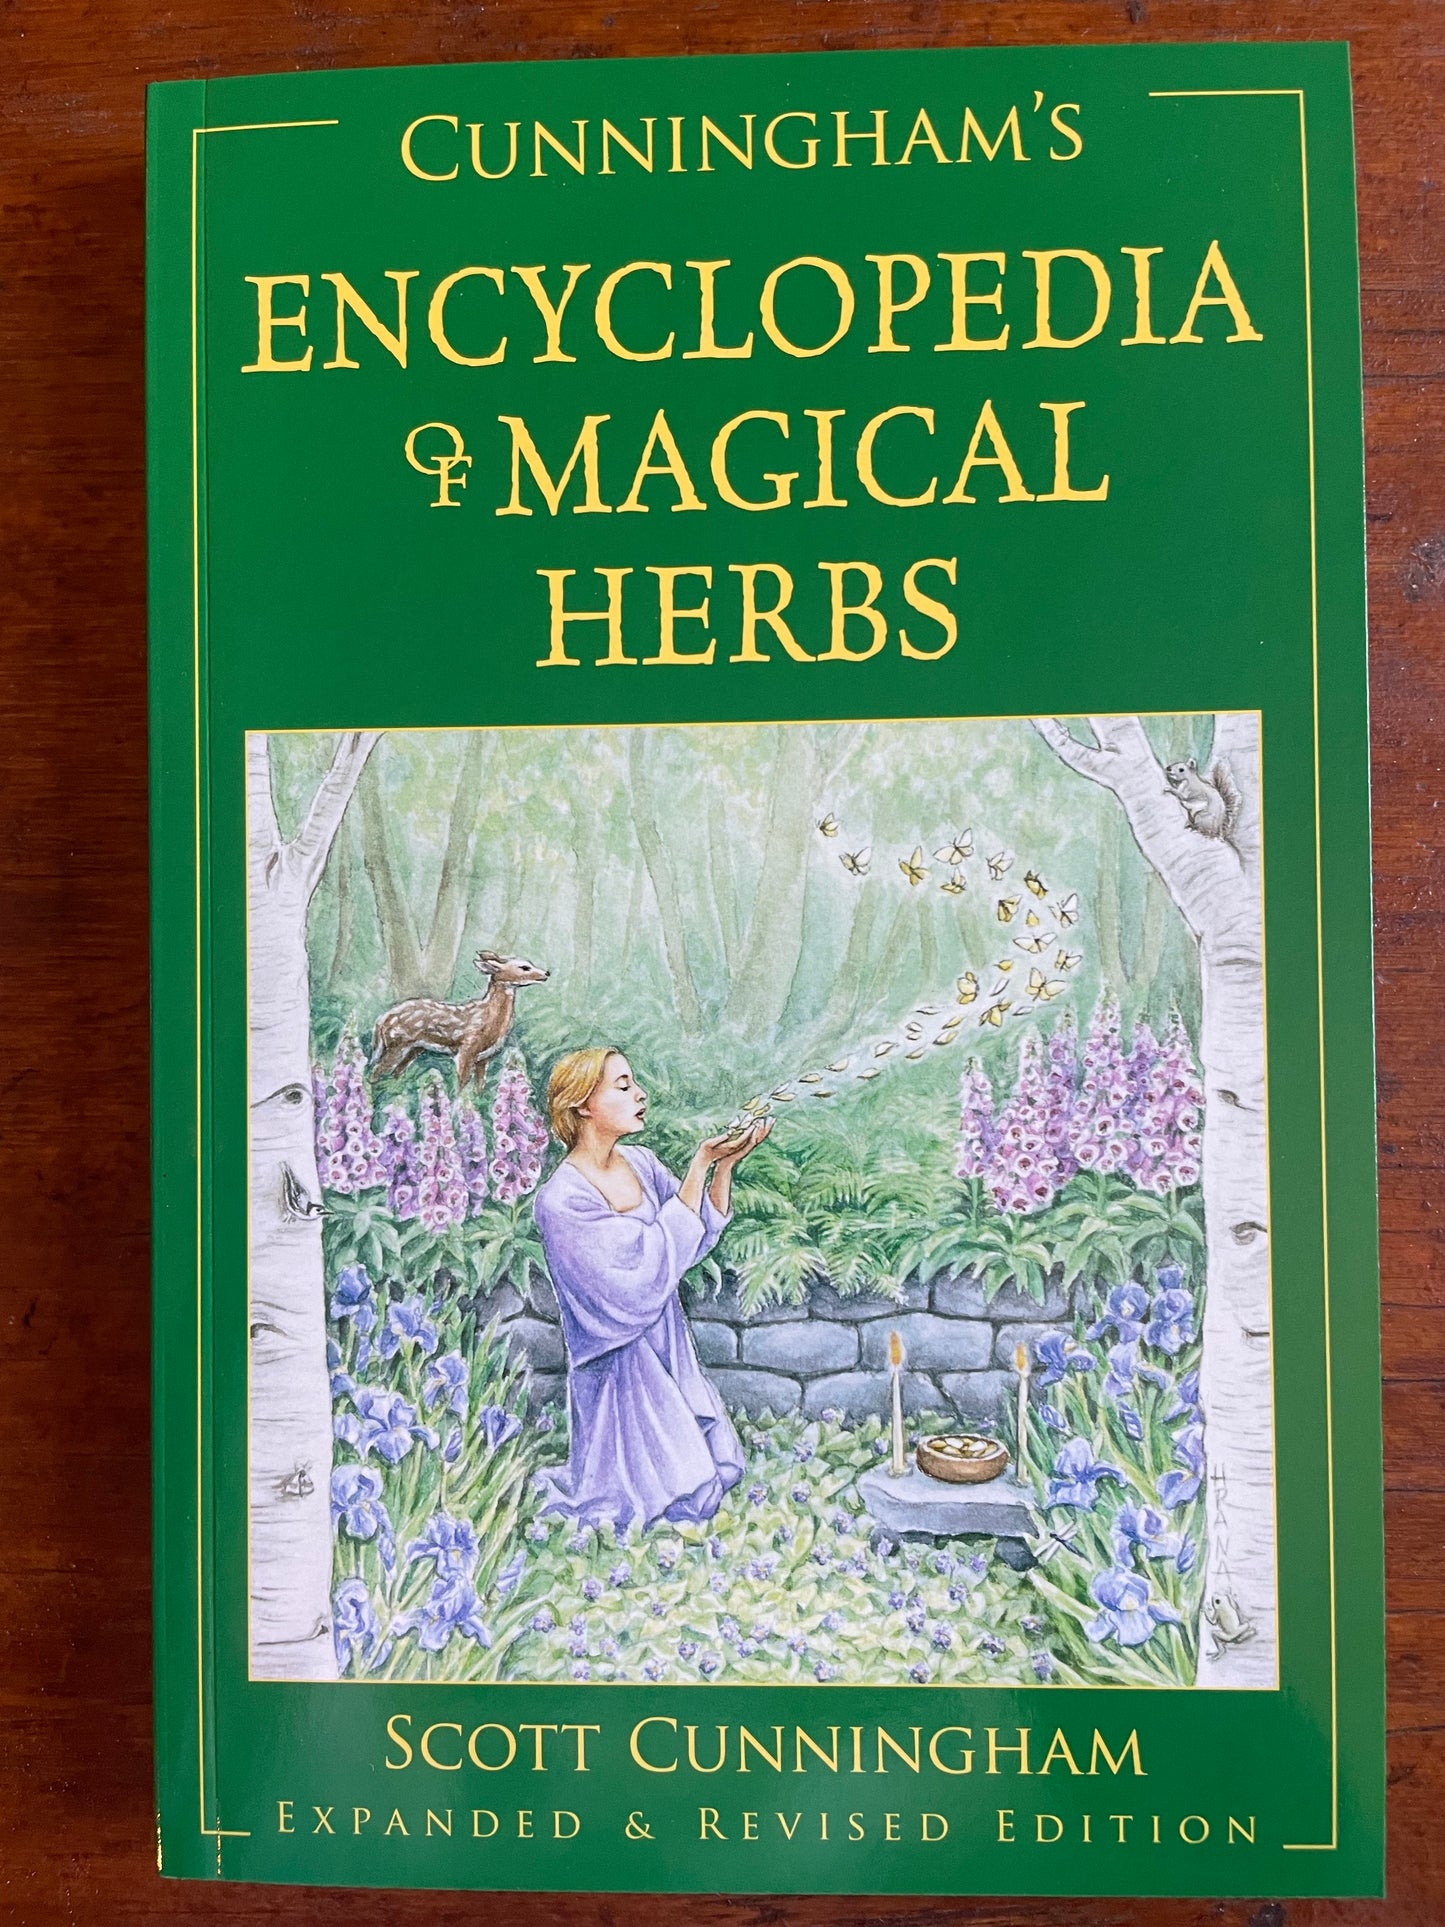 Cunningham’s Encyclopedia of Magical Herbs